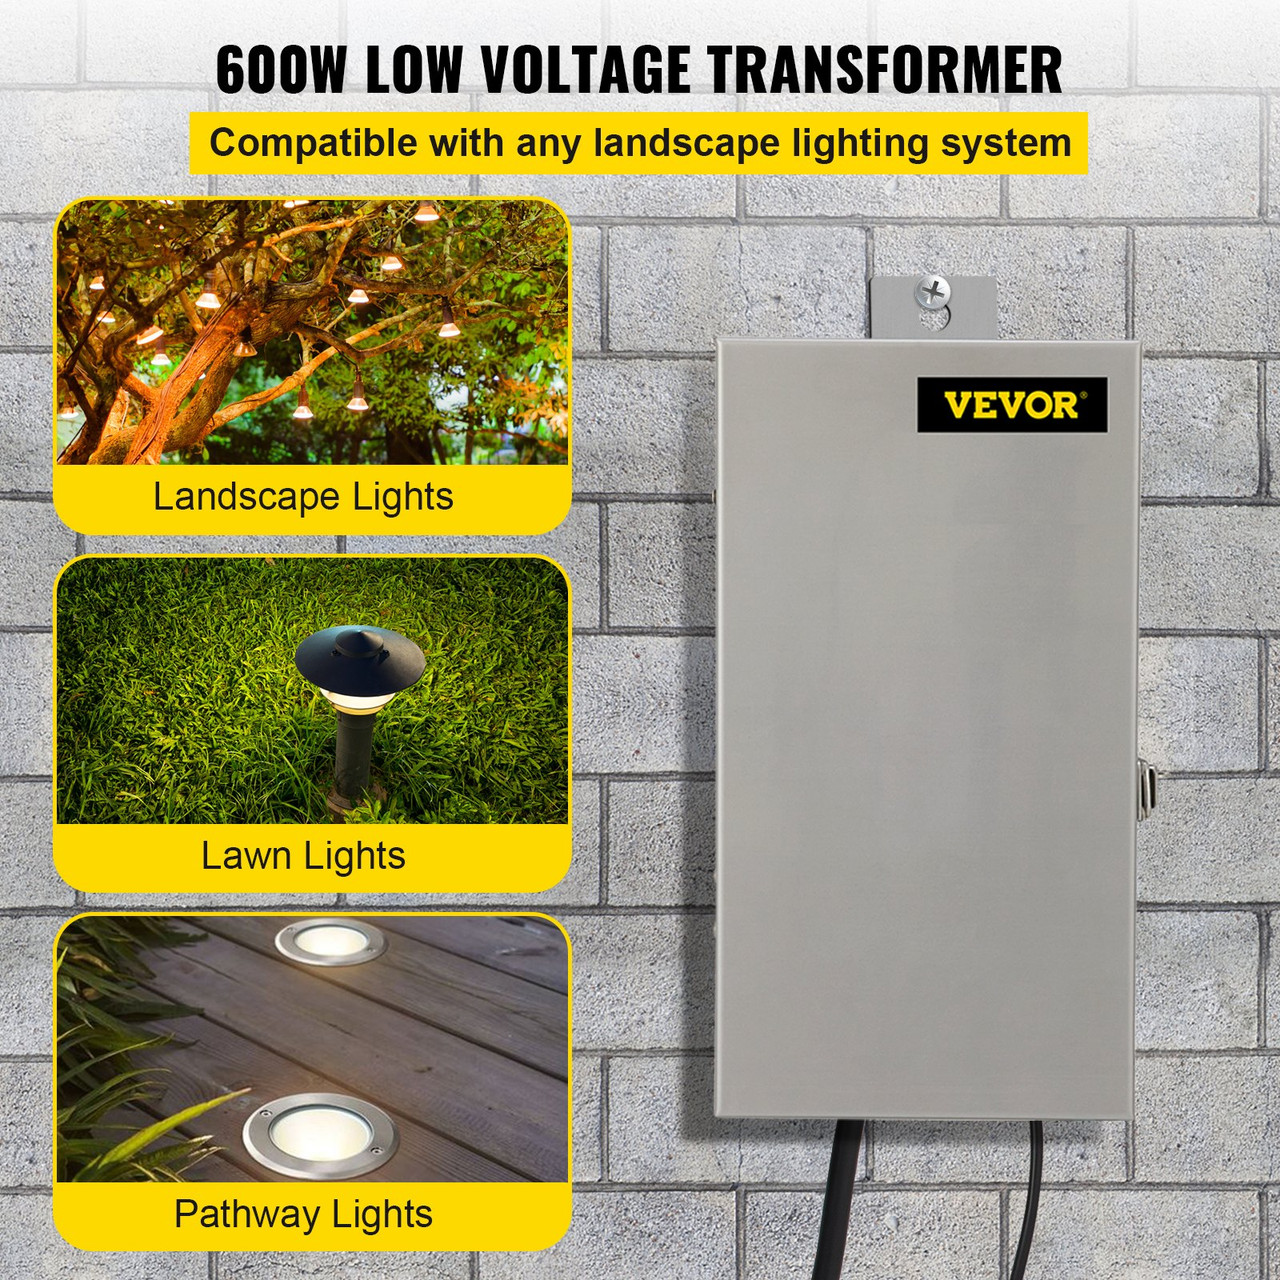 300W Outdoor Low Voltage Transformer with Timer and Photo Sensor, 120V AC  to 12V/15V AC Power Supply, Suitable for 12-15V Exterior Garden Landscape